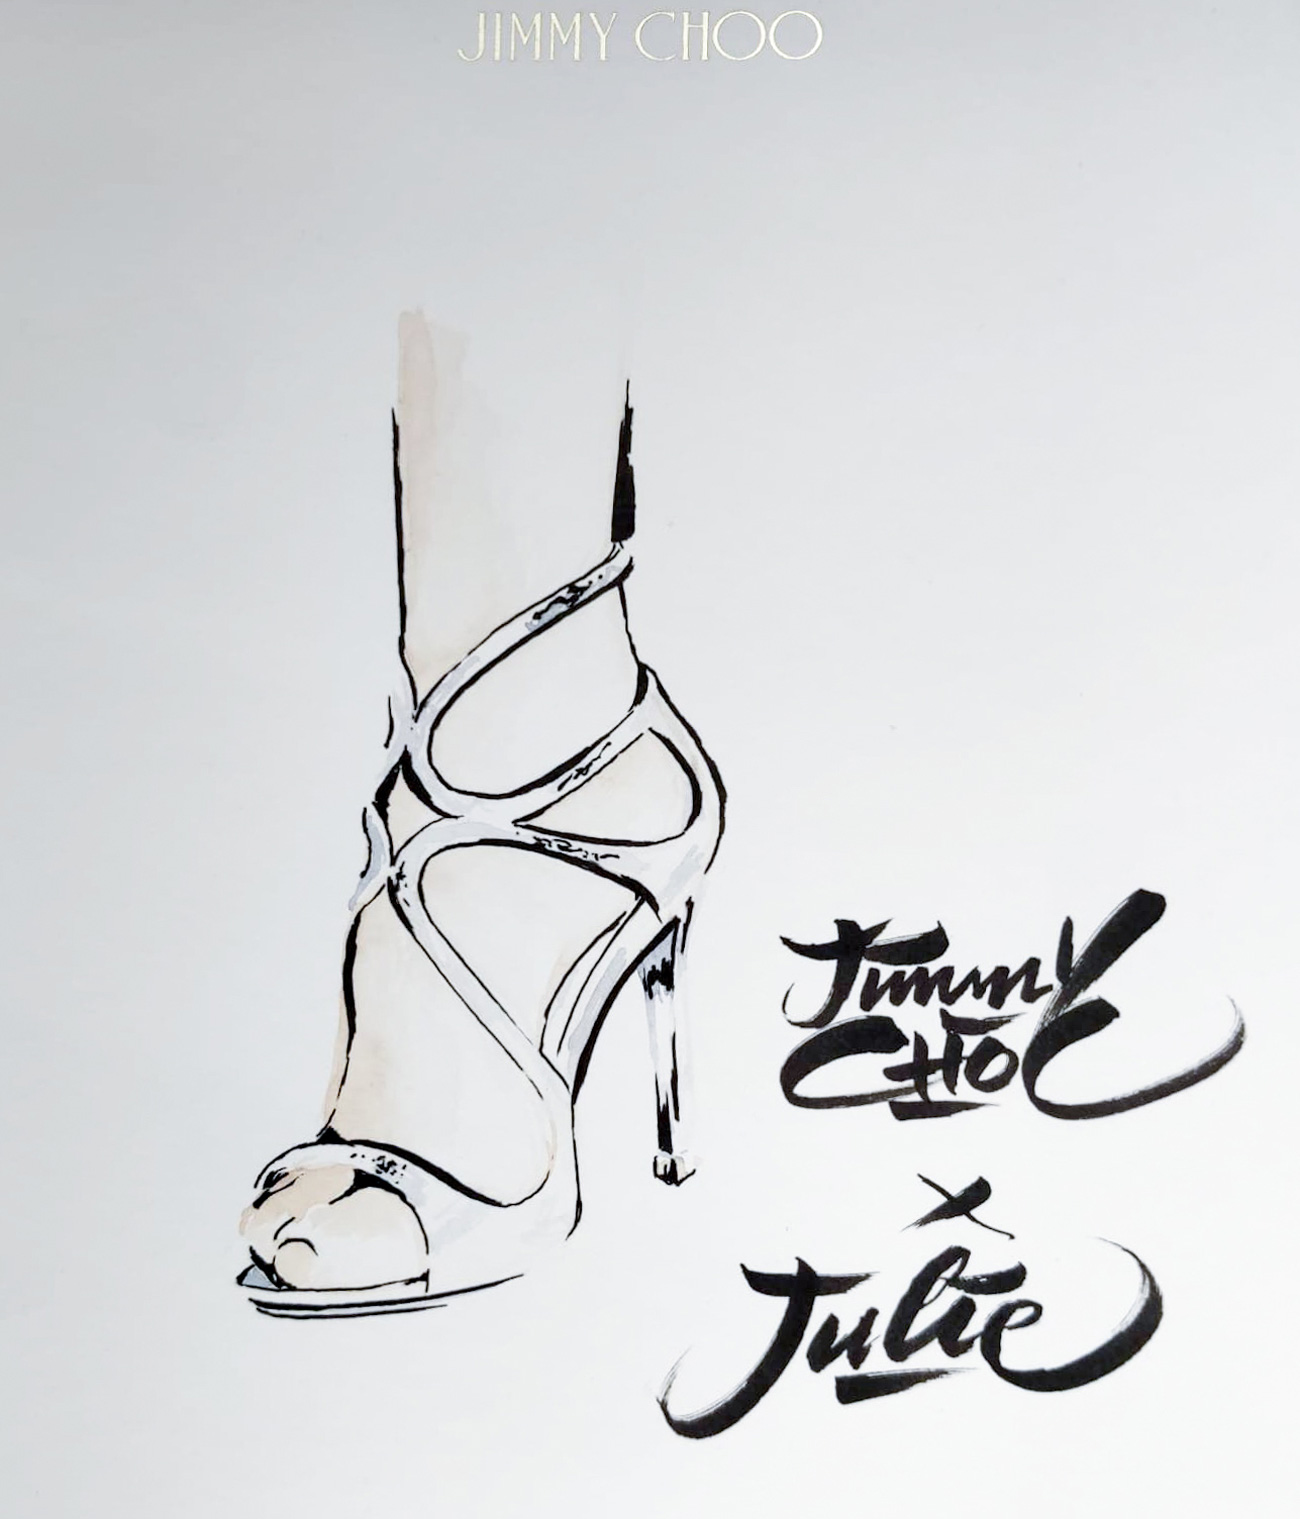 Watercolors art representing Jimmy Choo shoes